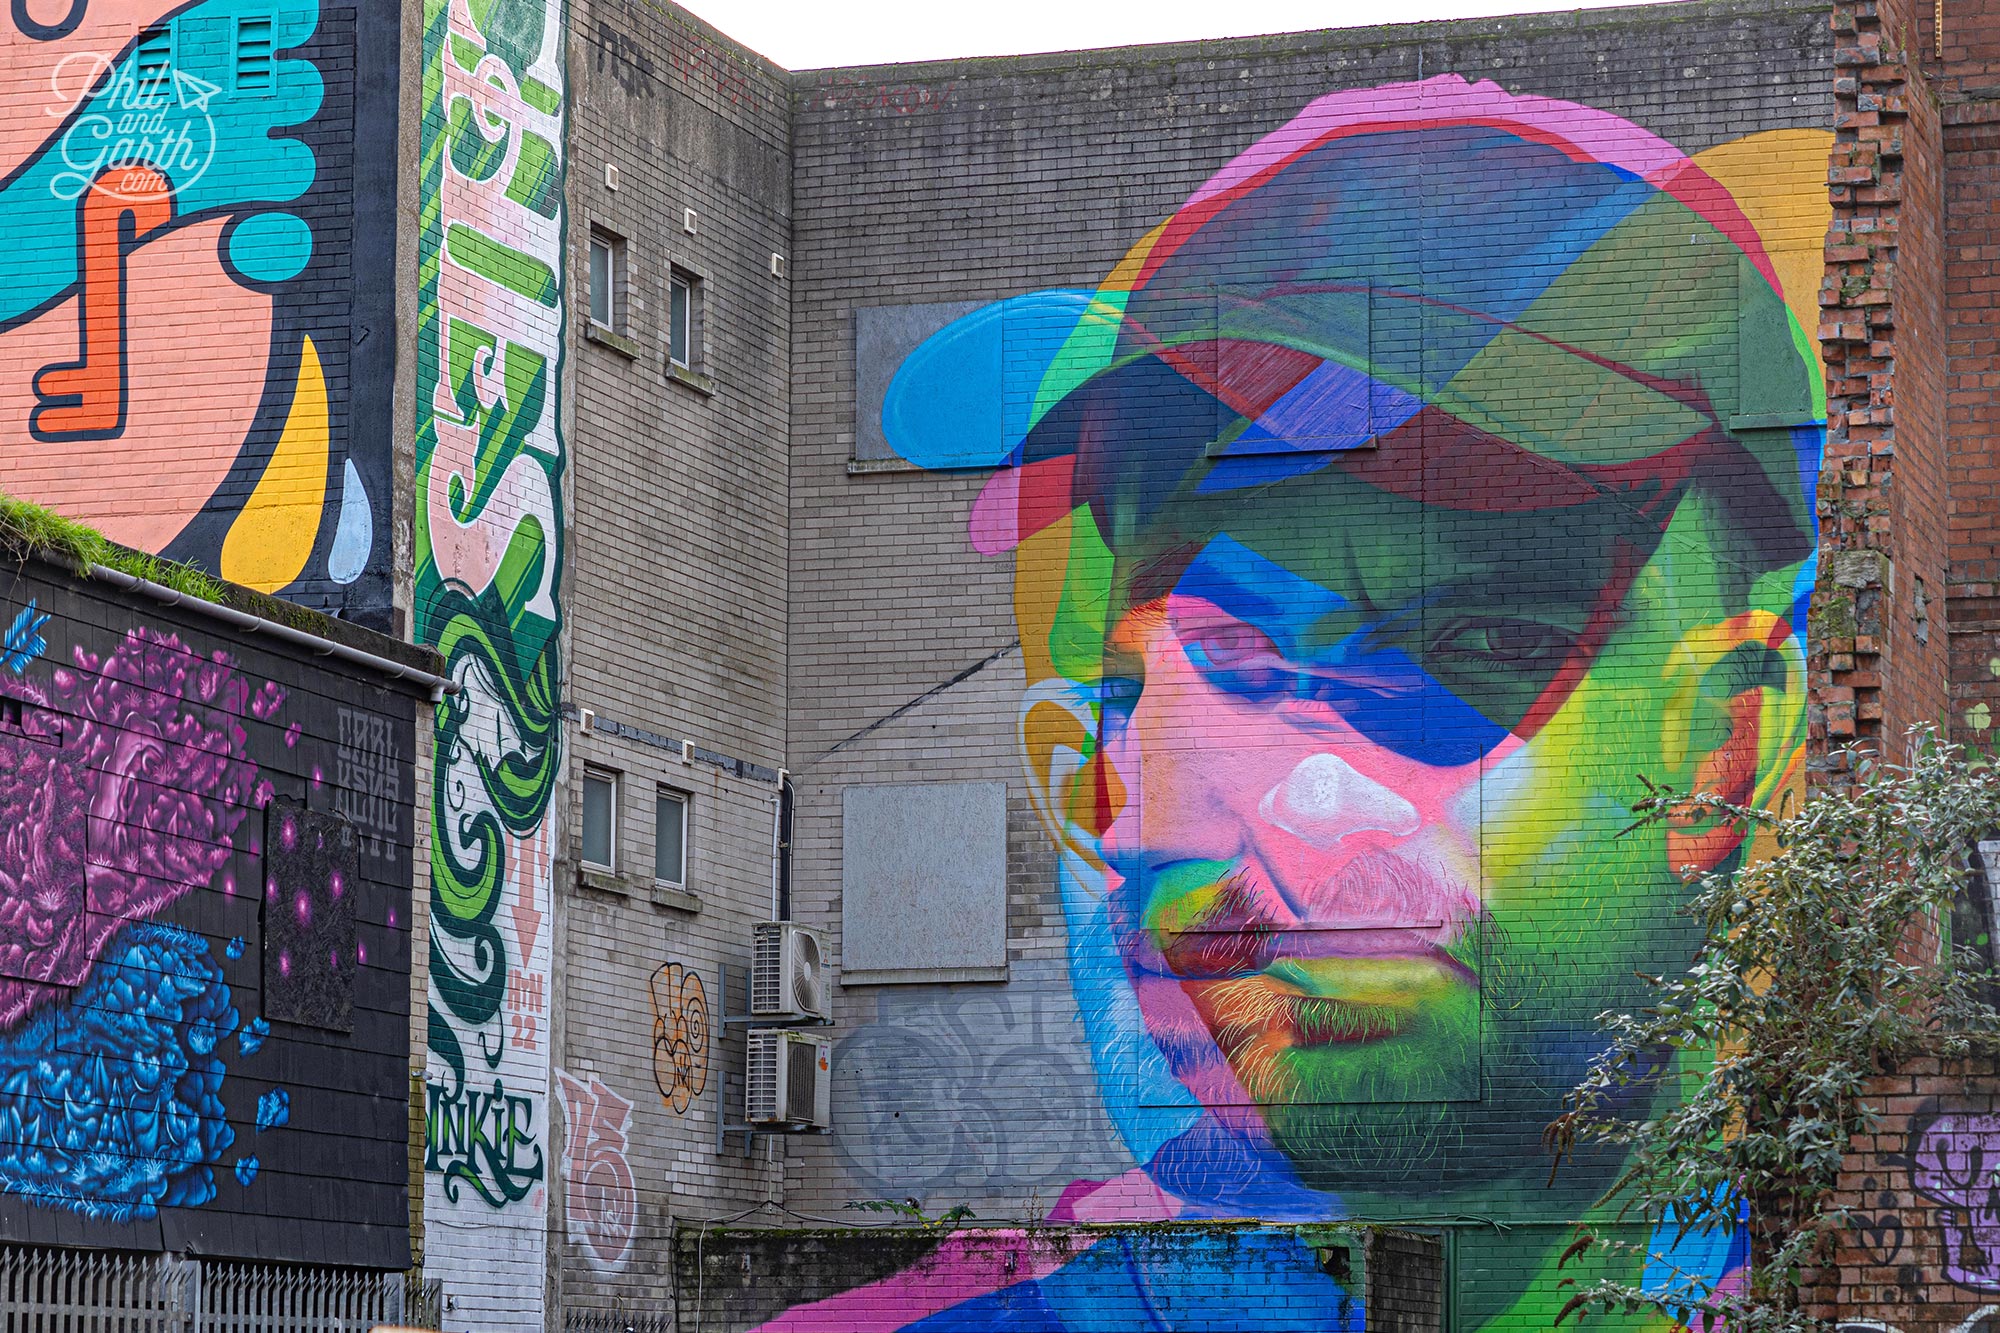 Belfast has a vibrant, contemporary street art scene